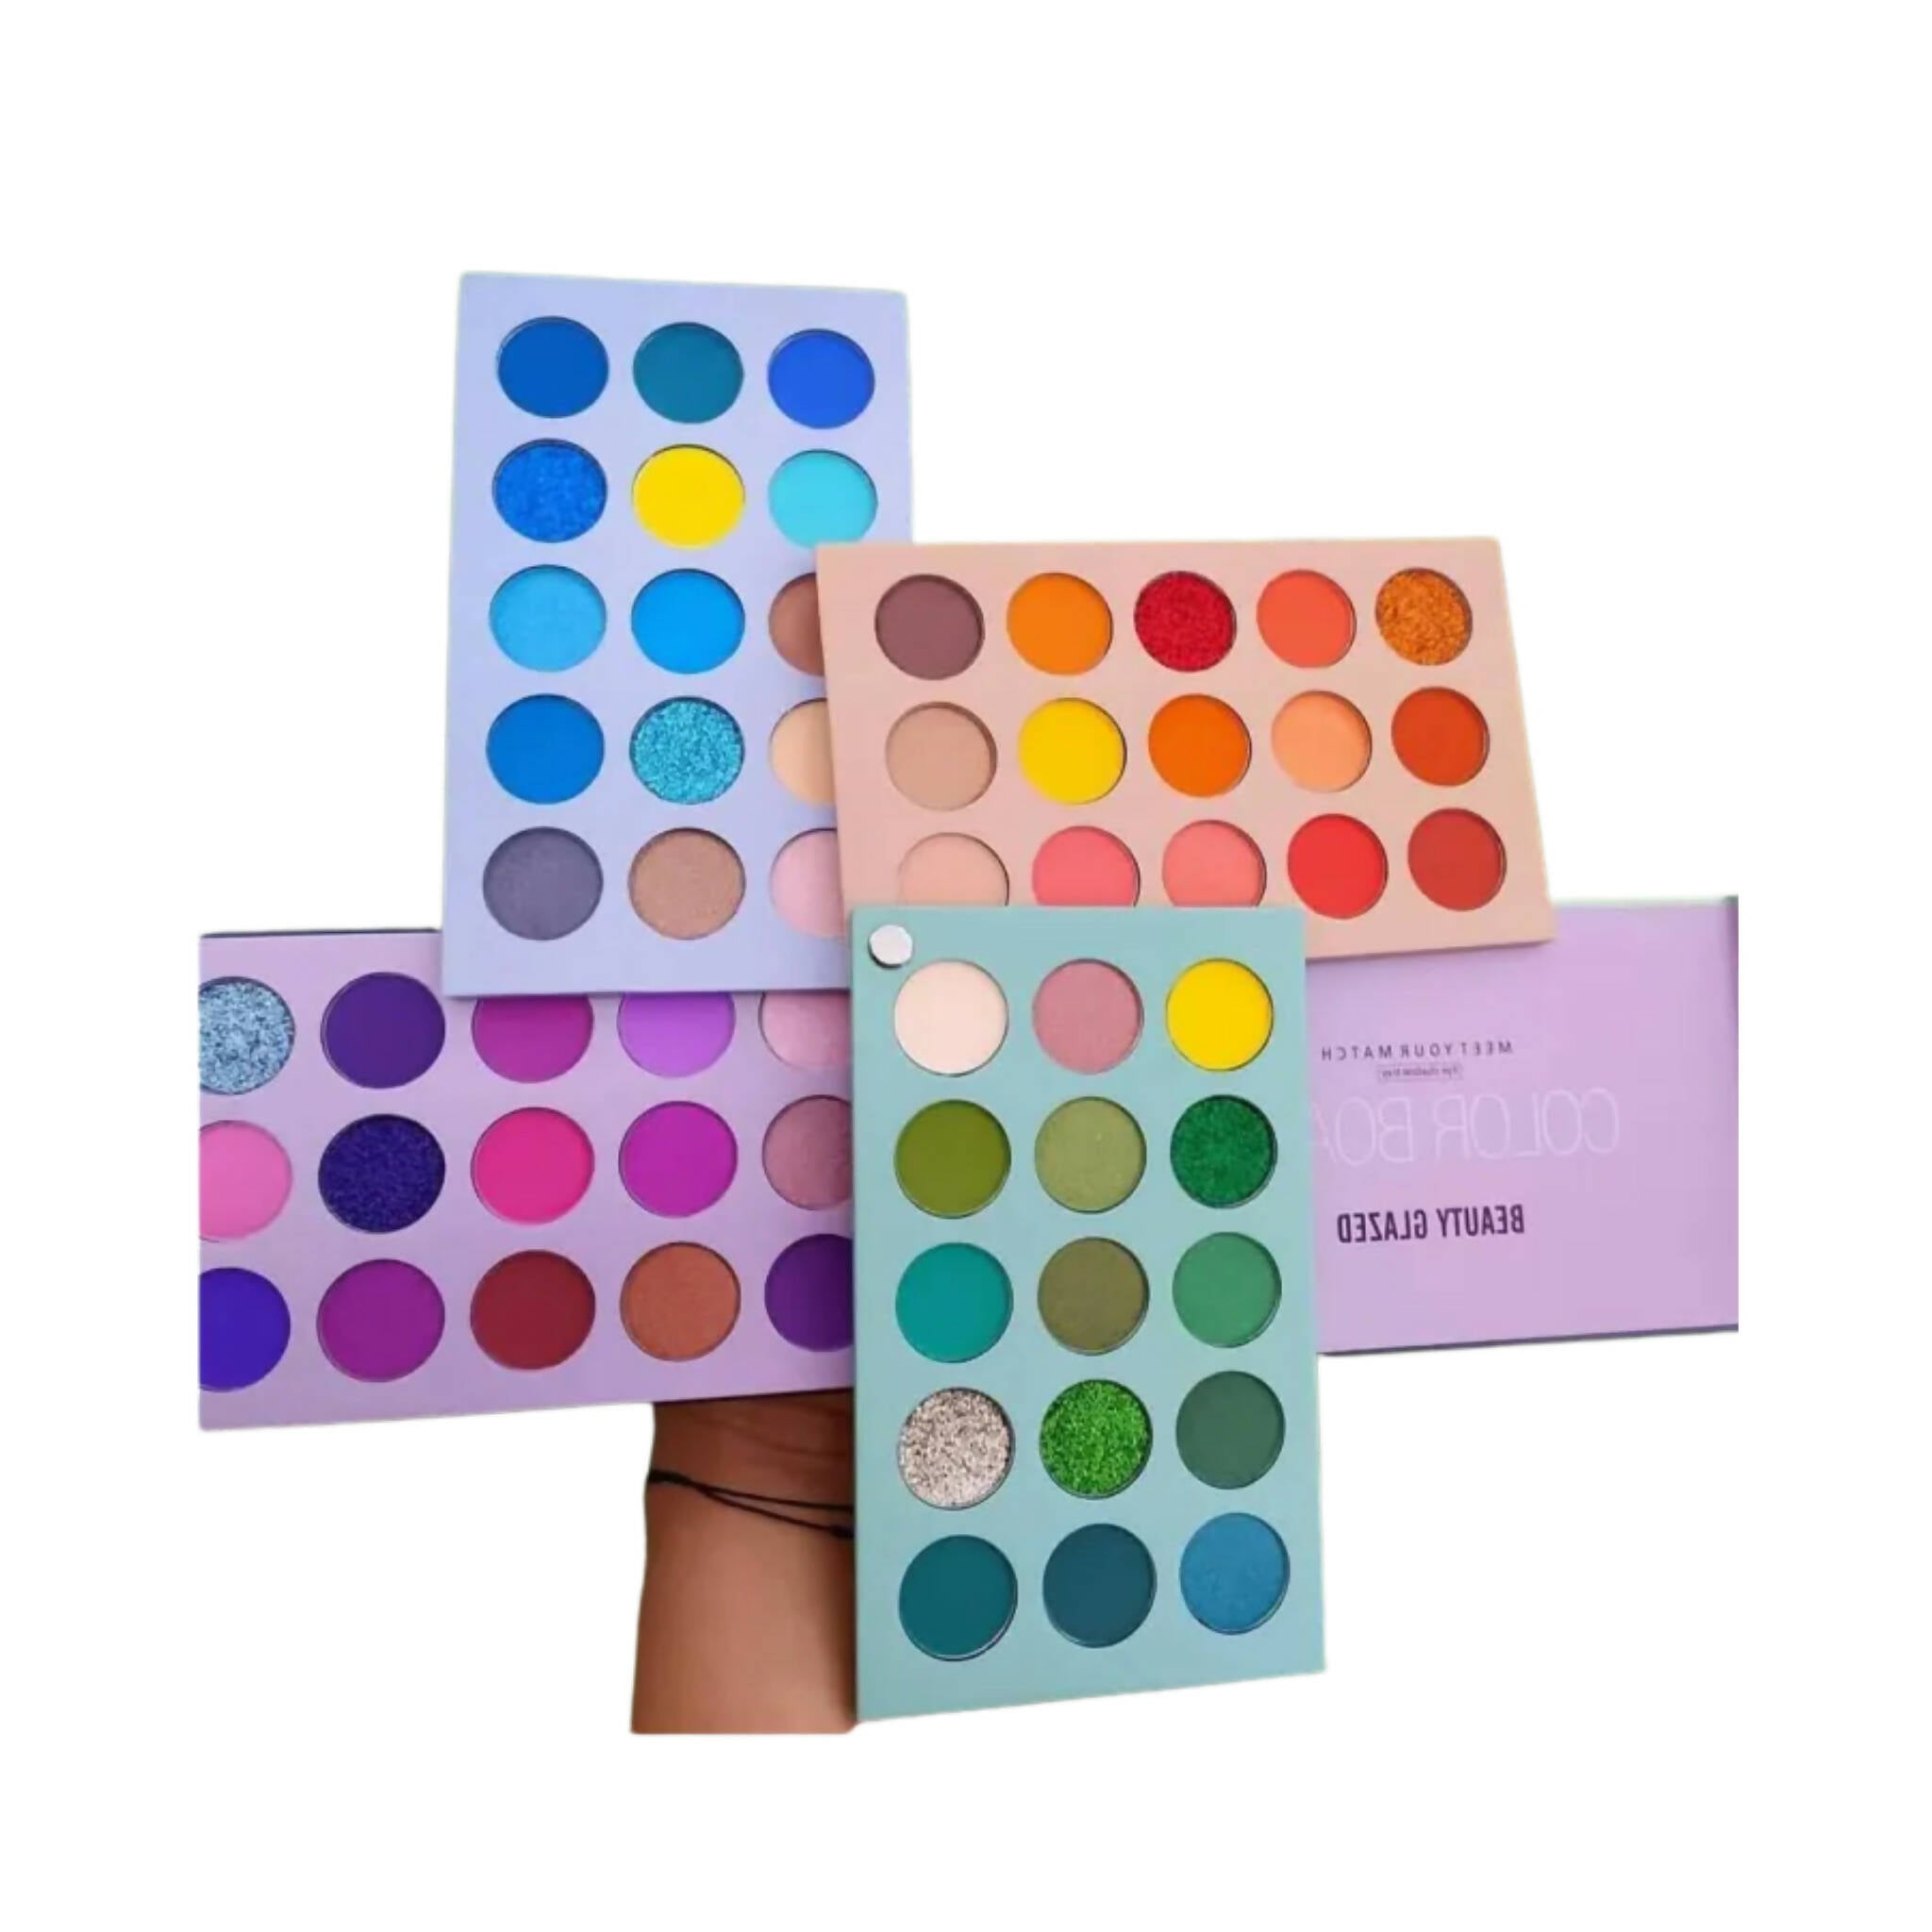 Eyeshadow Matte Palette, 60 Colors & Glitters Makeup, for Women